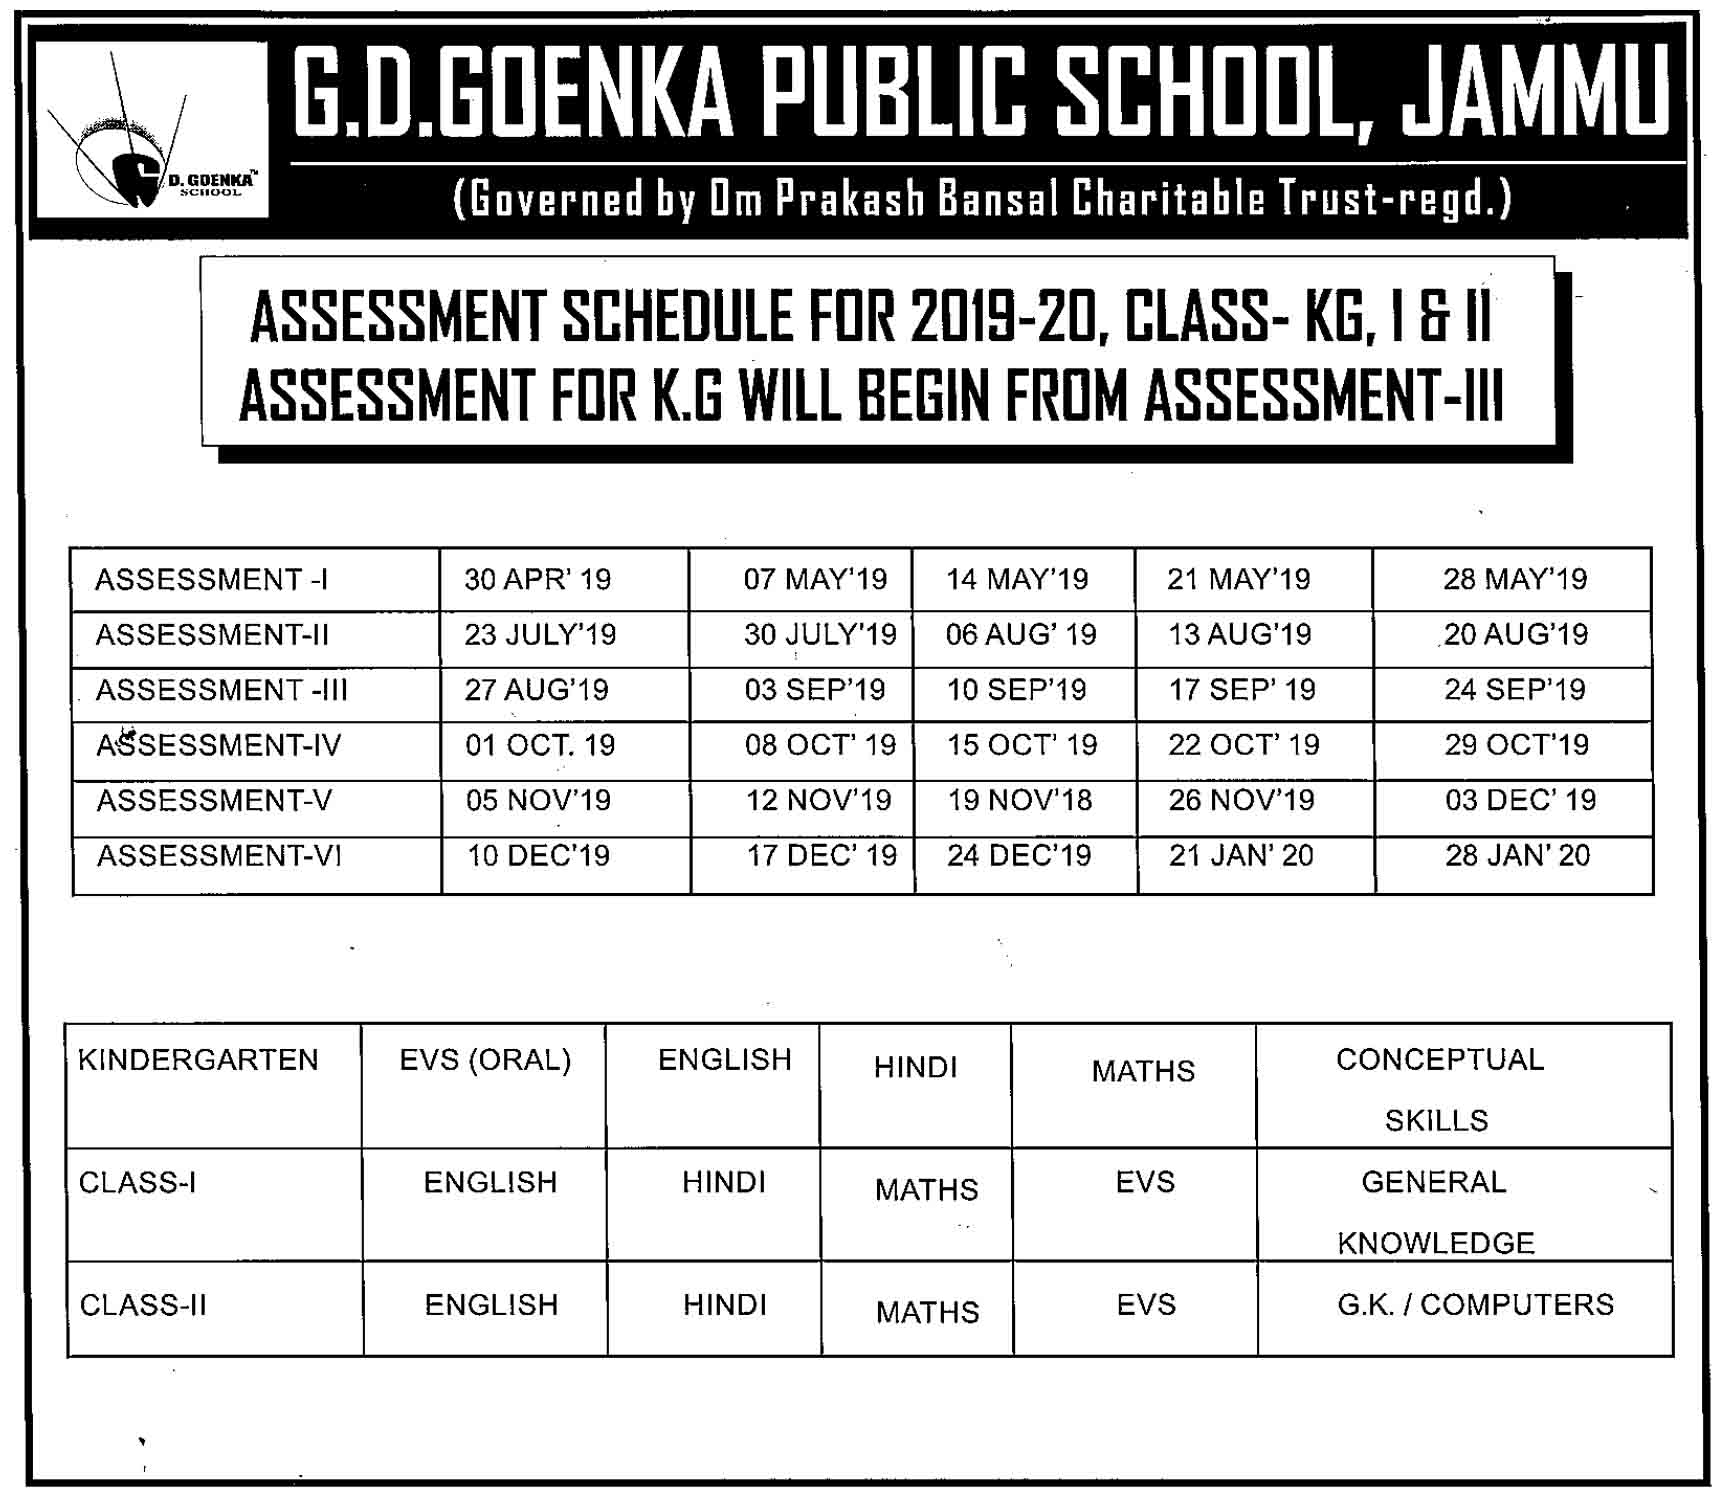 G.D. Goenka Public School, Jammu